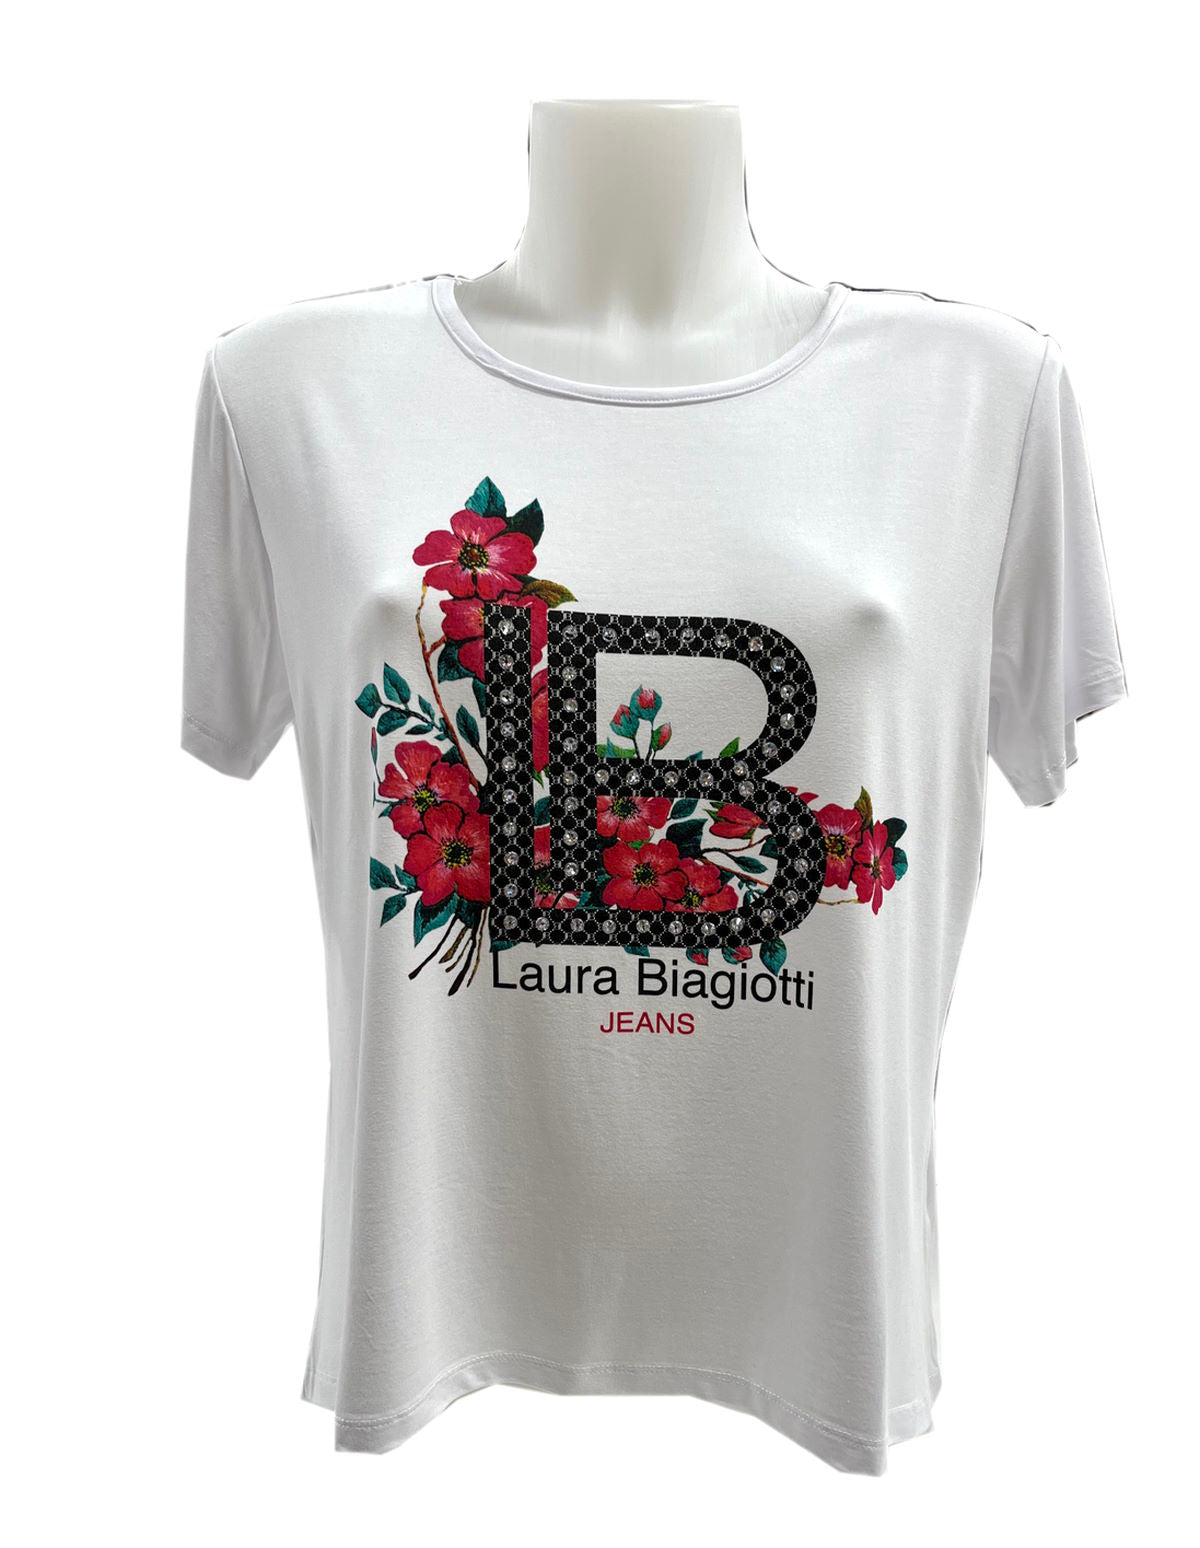 T-shirt, Brand Laura Biagiotti, Made in Italy, art. JLB02-217